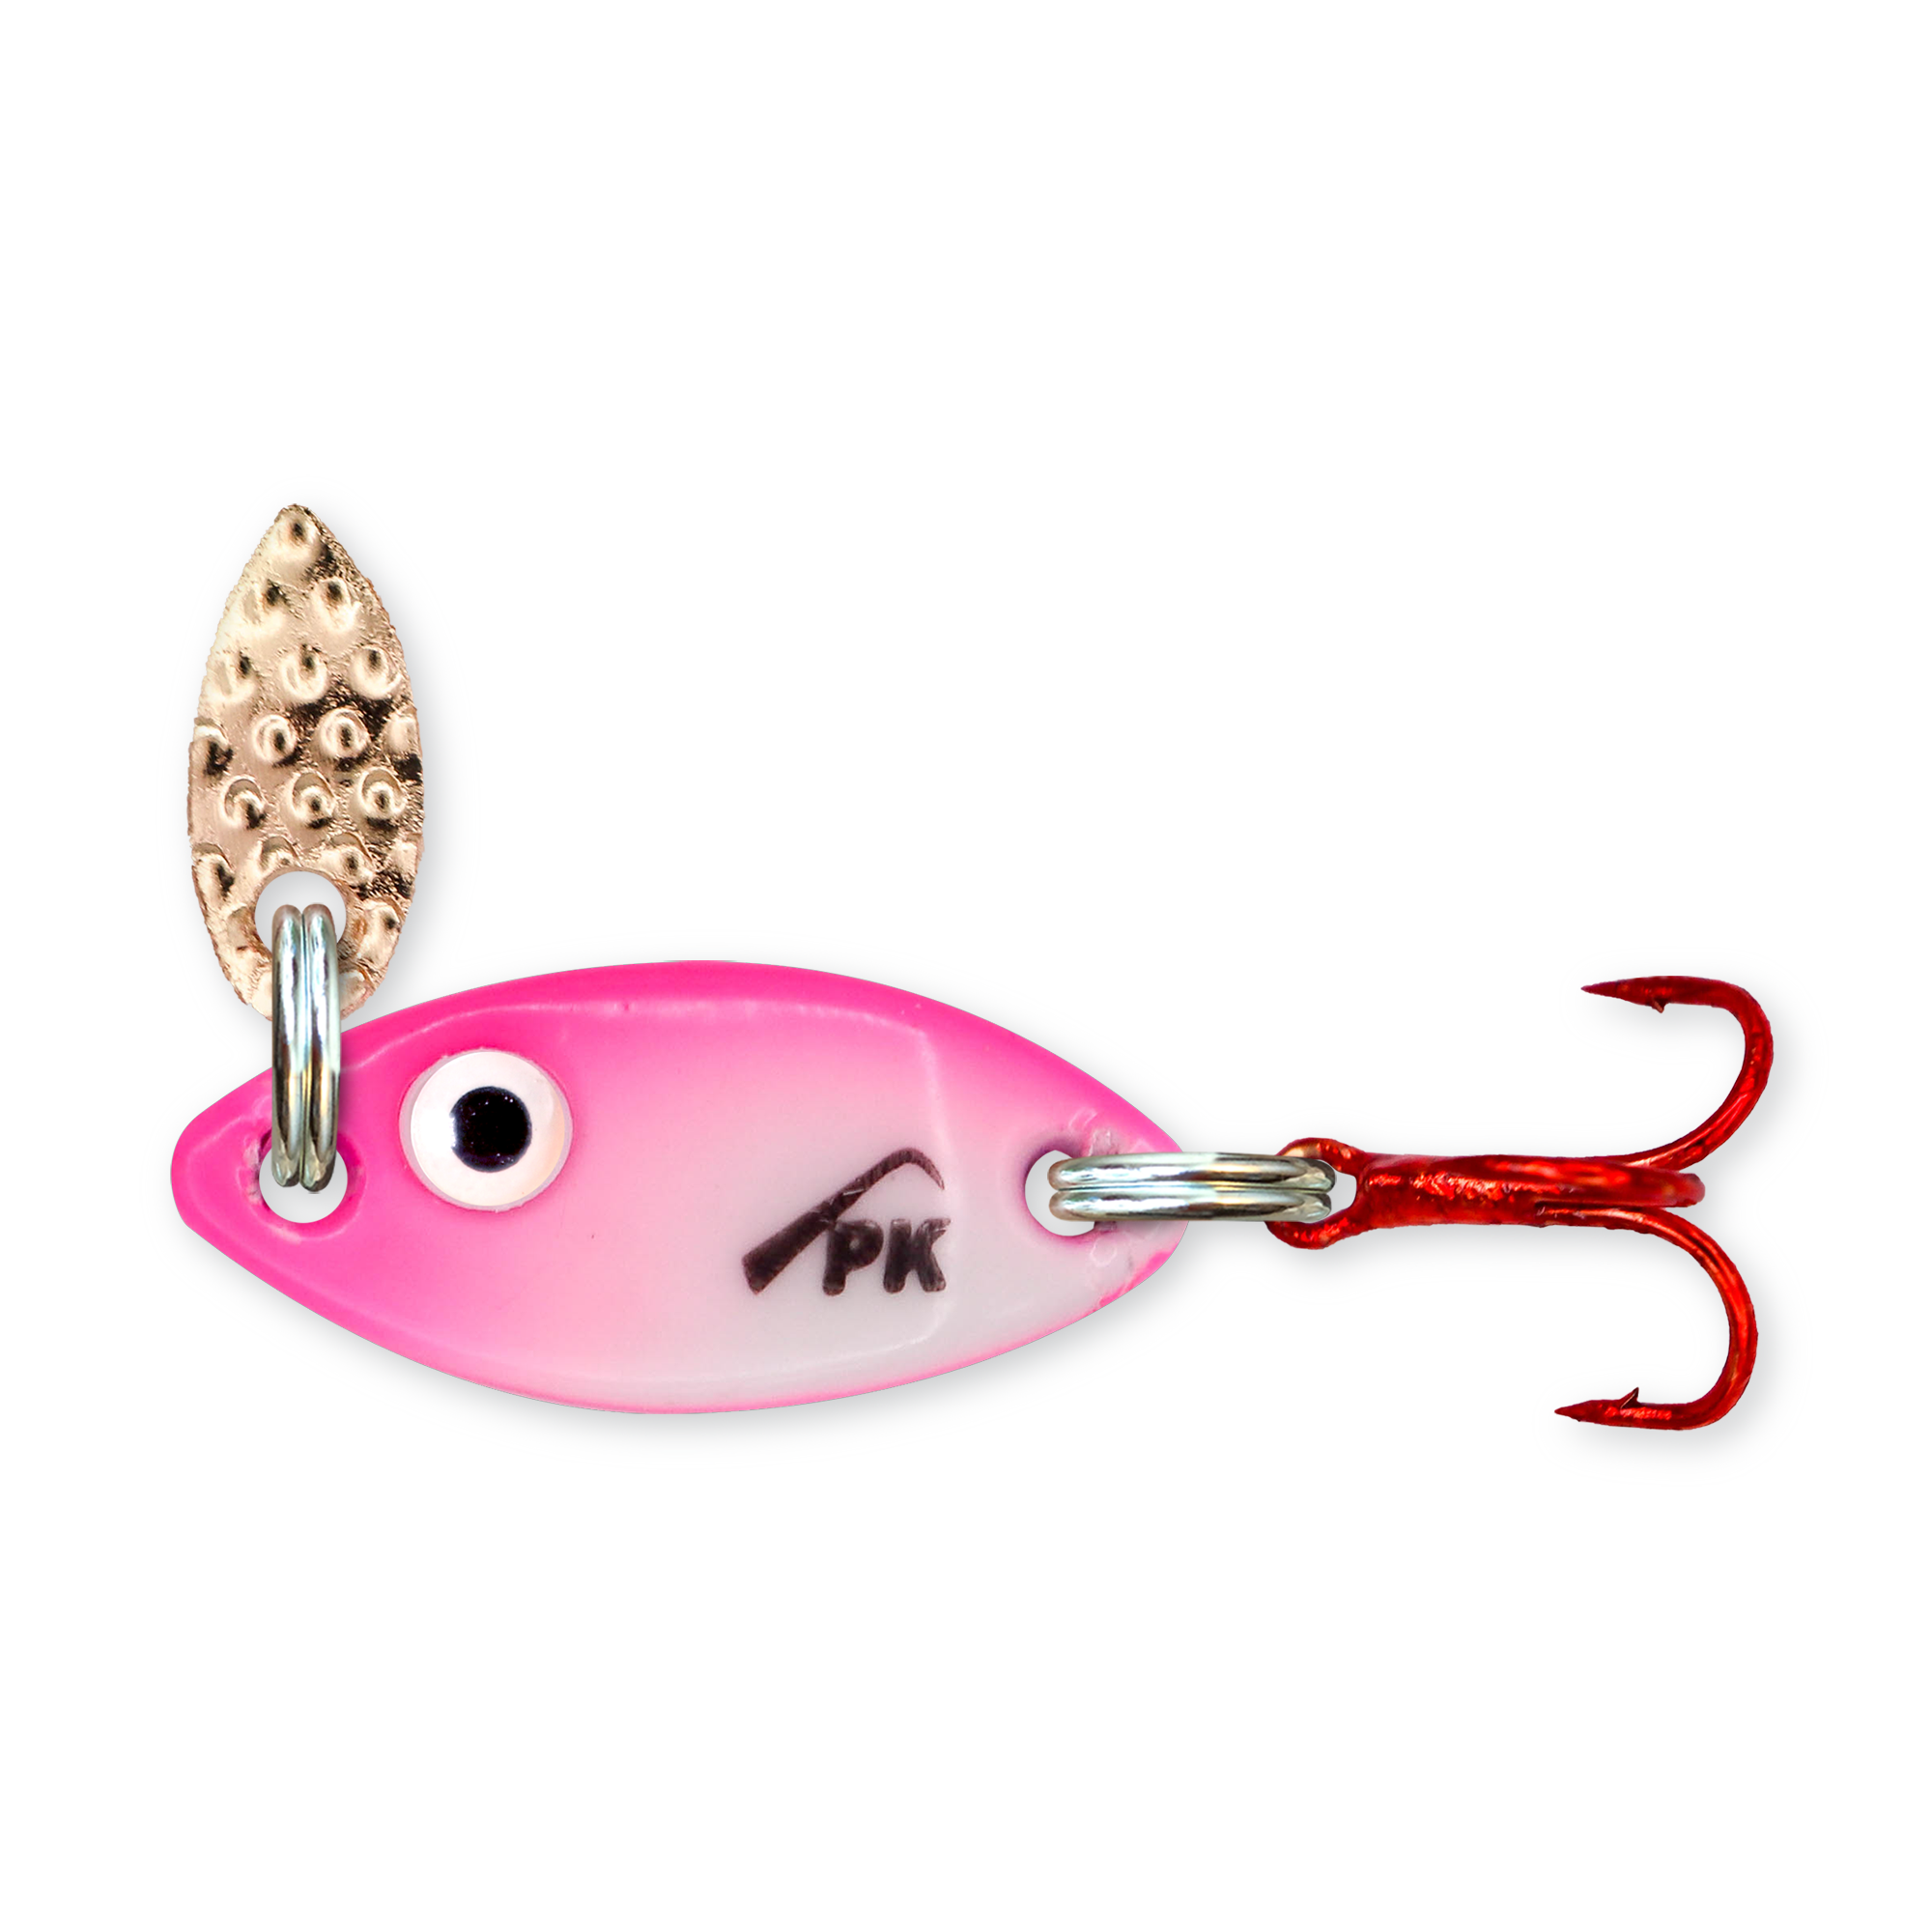 Danielson 4.5 Rigged Squid Bait, UV Pearl & Pink, 3Pk, Fishing